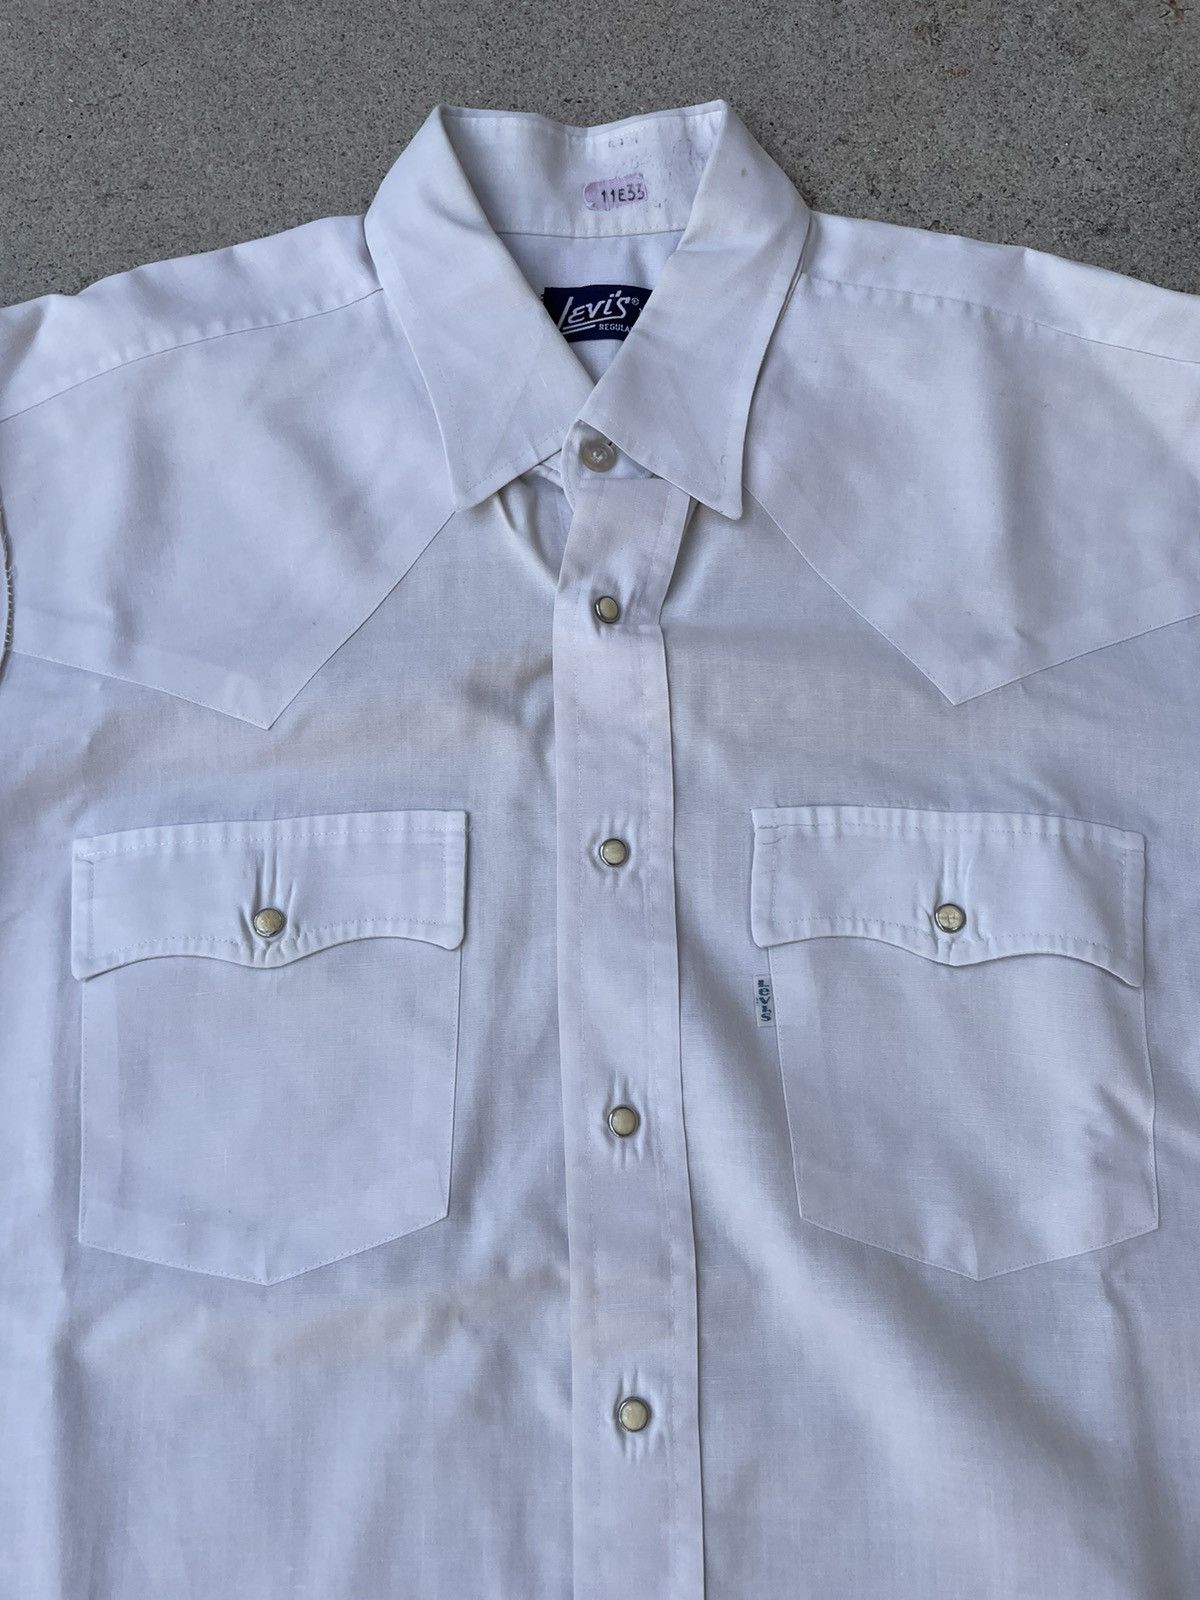 Vintage Vtg 80s Levis White Tab Western Pearl Snap Buttoned Shirt XL Size US XL / EU 56 / 4 - 4 Thumbnail